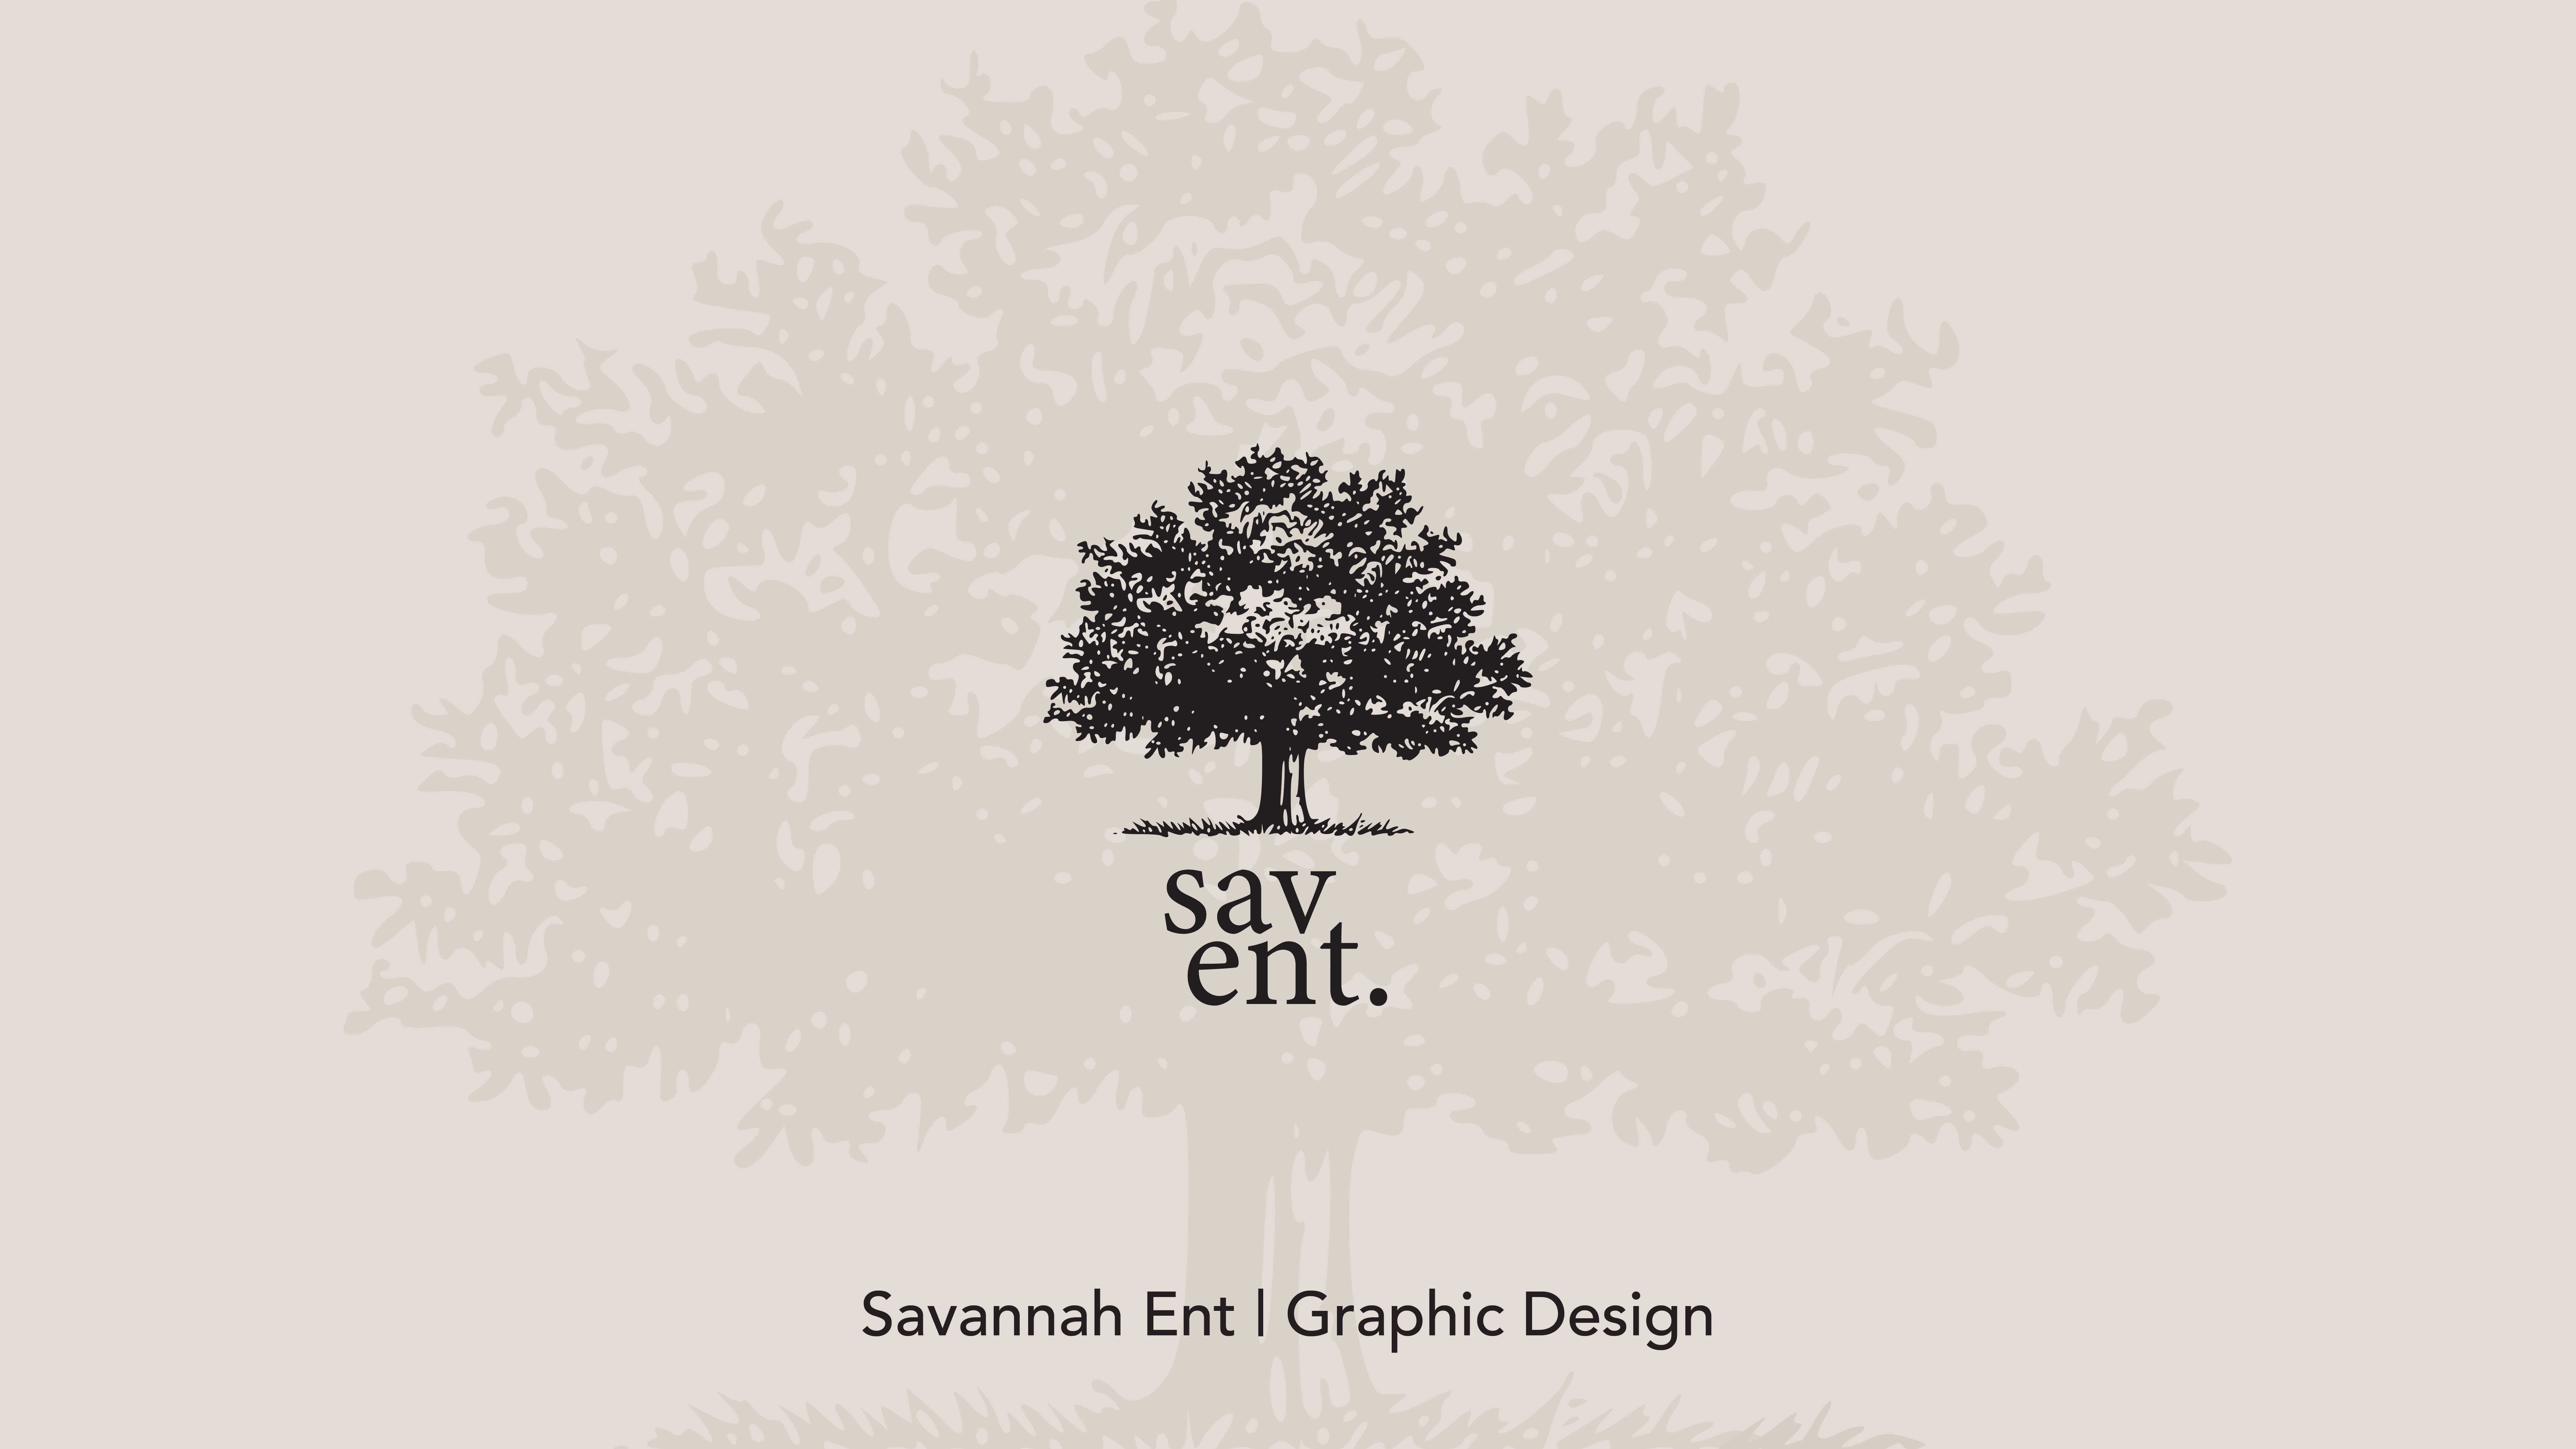 Savannah Ent logo / Savannah Ent logo